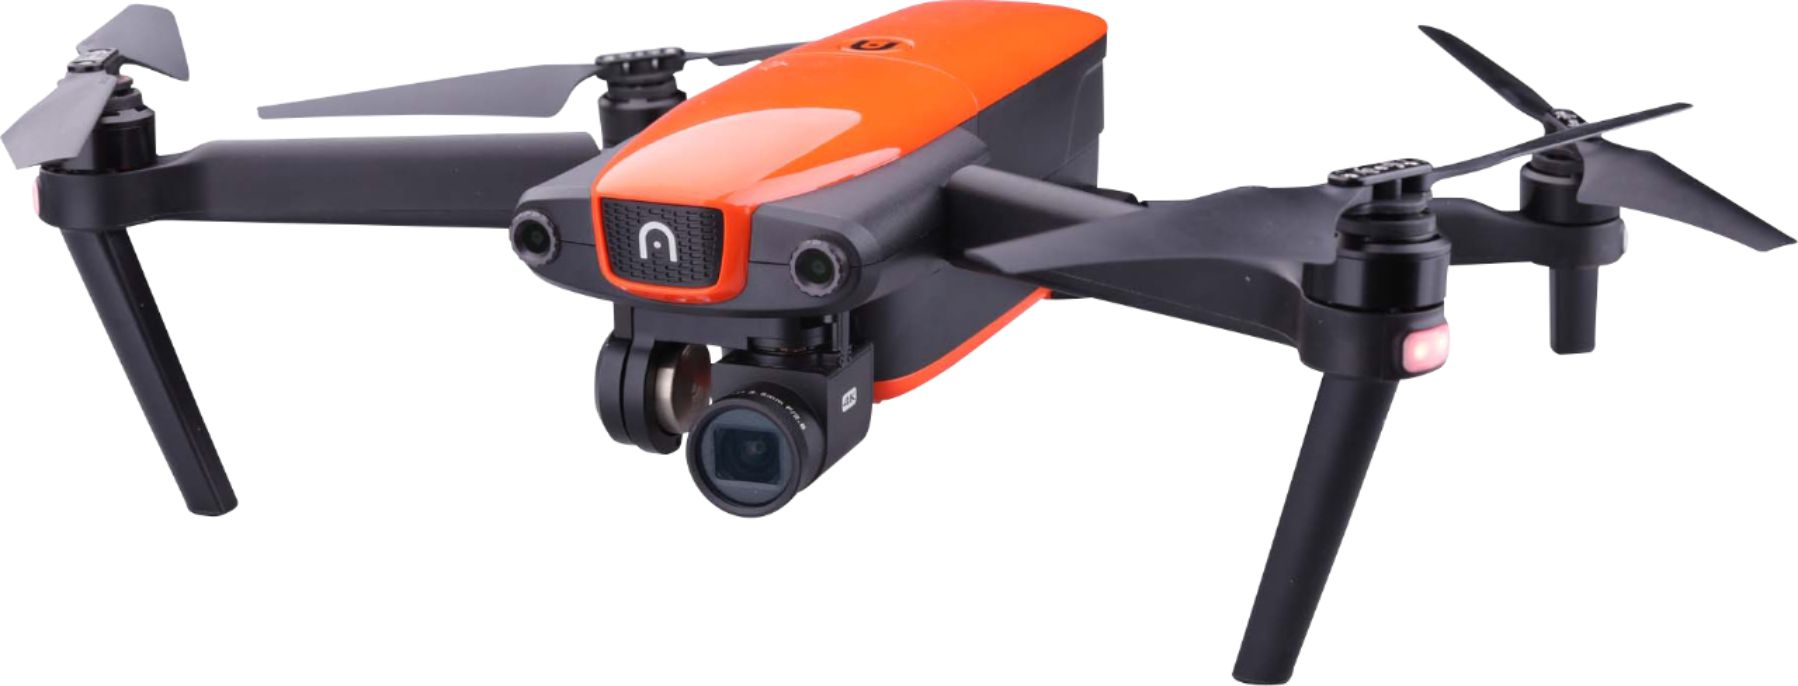 Customer Reviews Autel Robotics Evo 4k Drone With Controller Orange Evo Best Buy